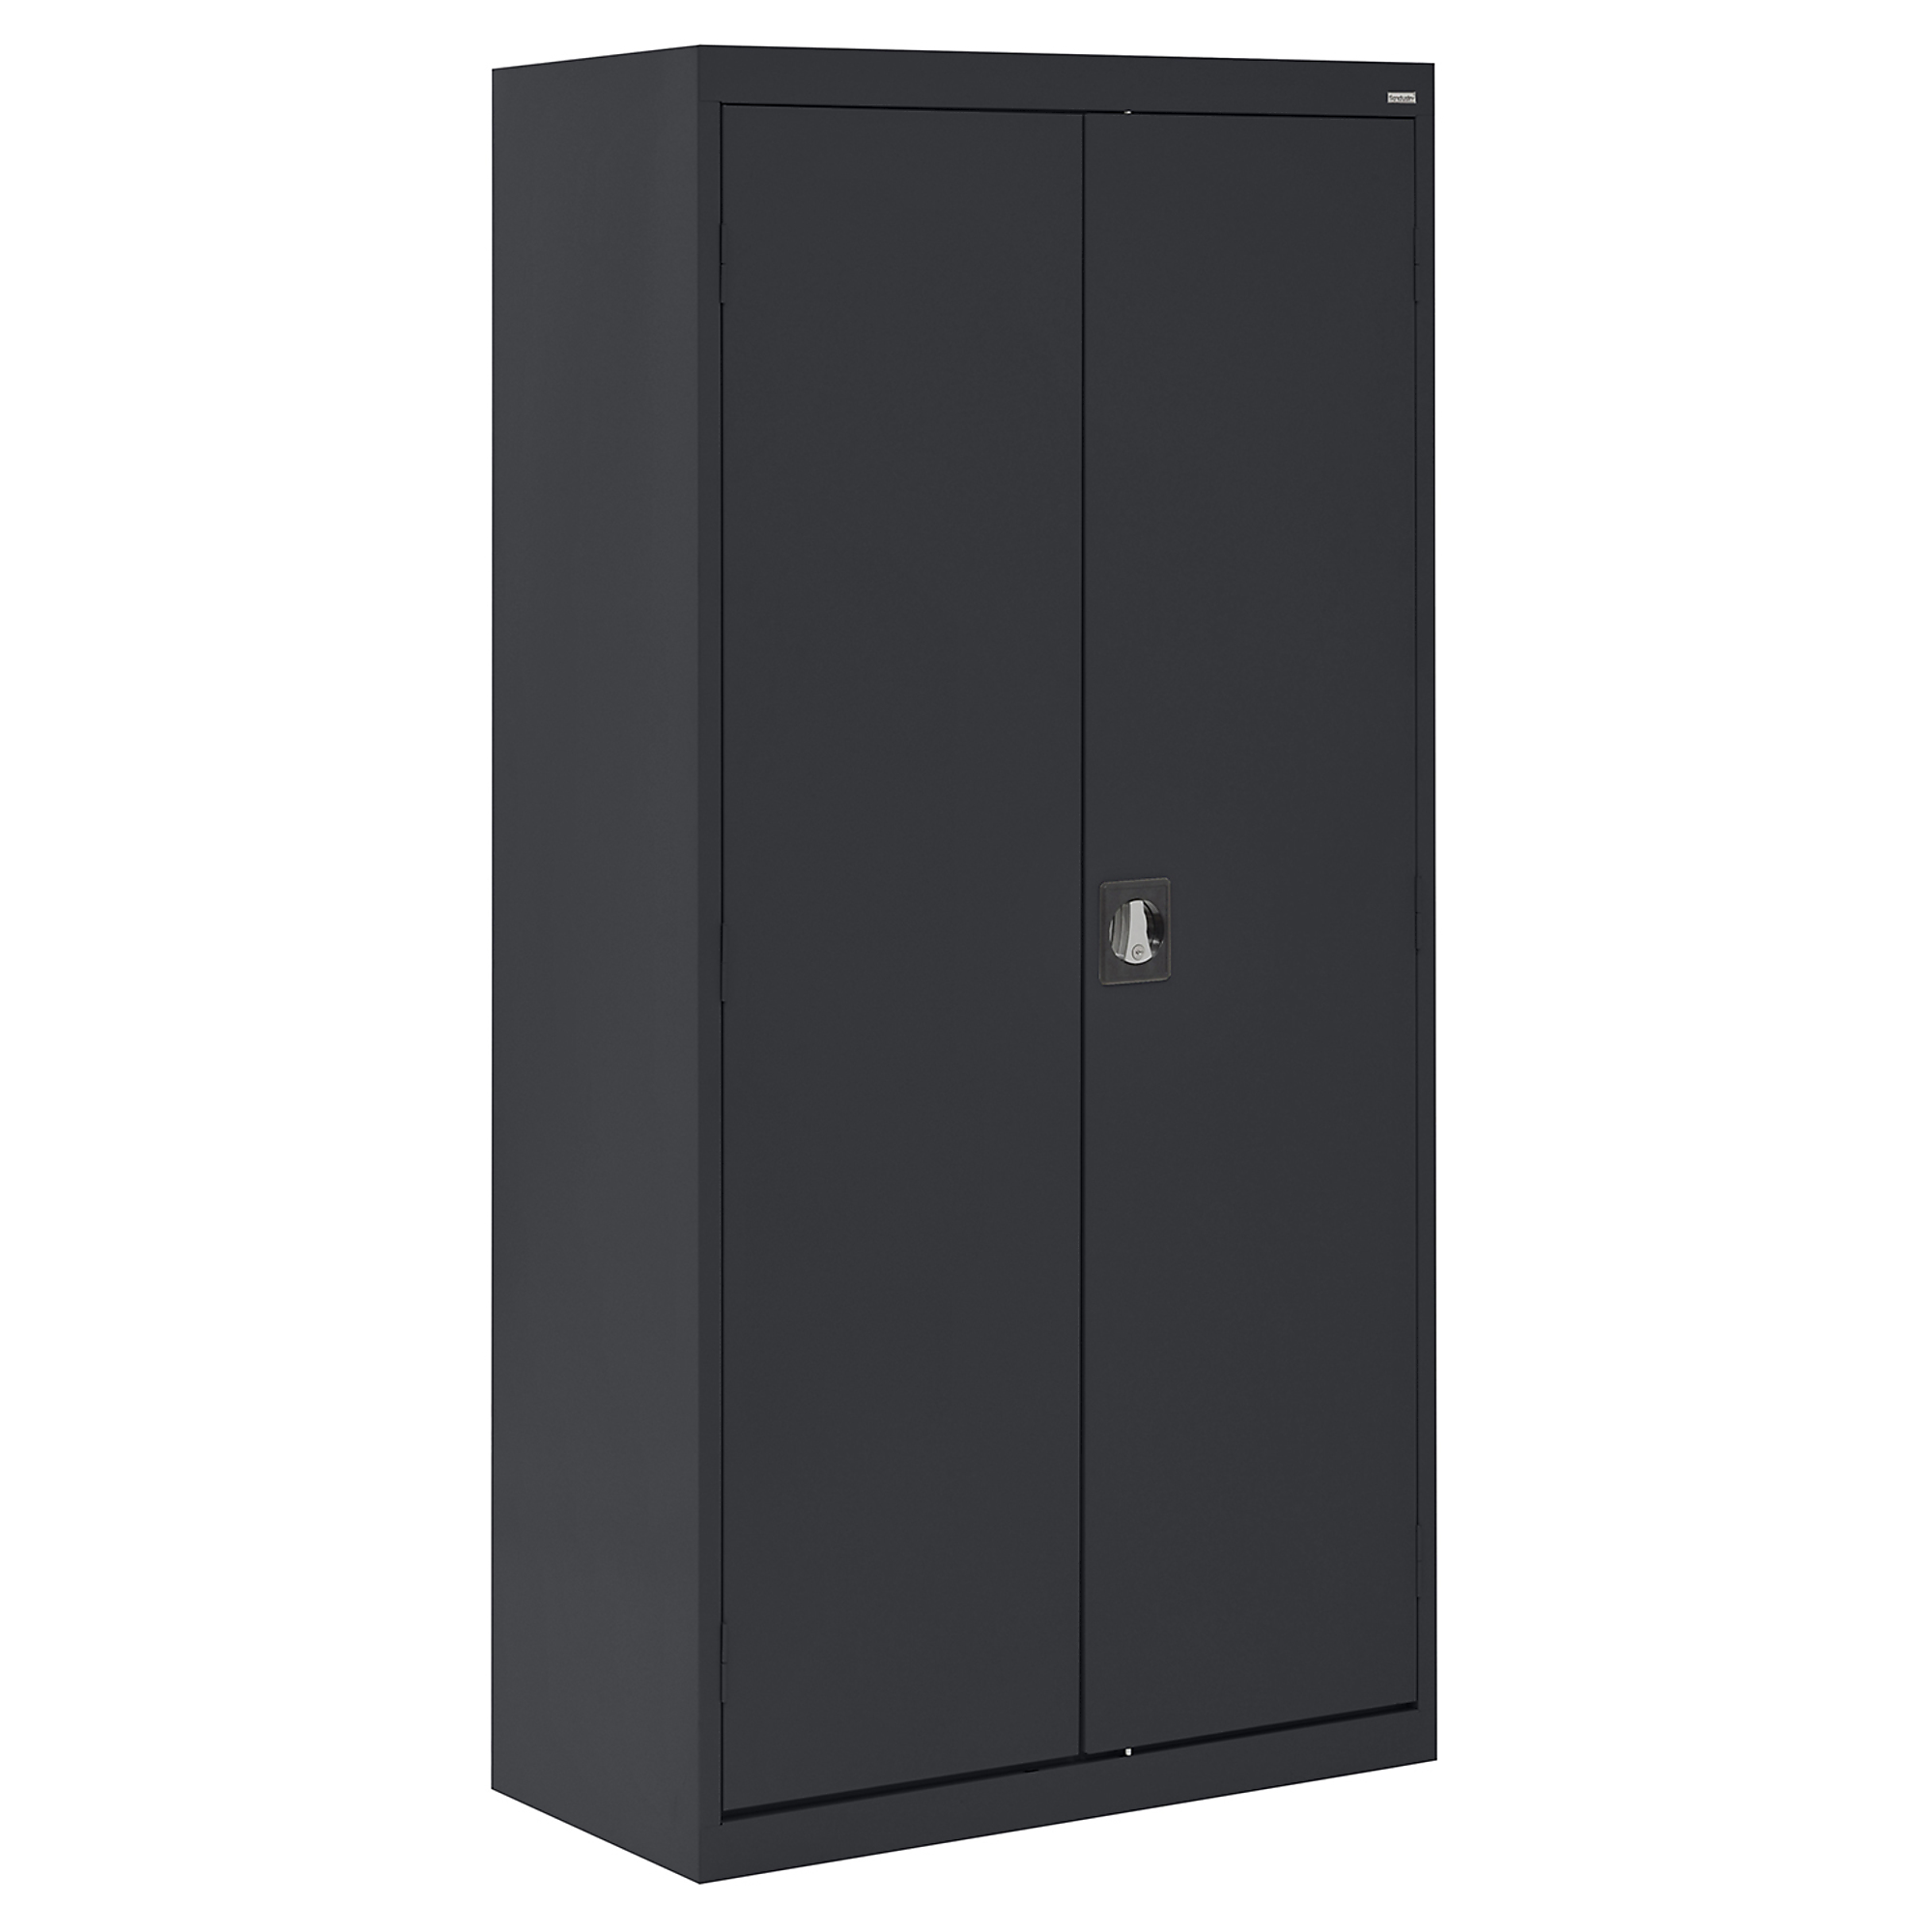 Sandusky, Elite Series Welded Cabinet 36x18x72 - Black, Height 72 in, Width 36 in, Color Black, Model - Sandusky Lee EA4R361872-09